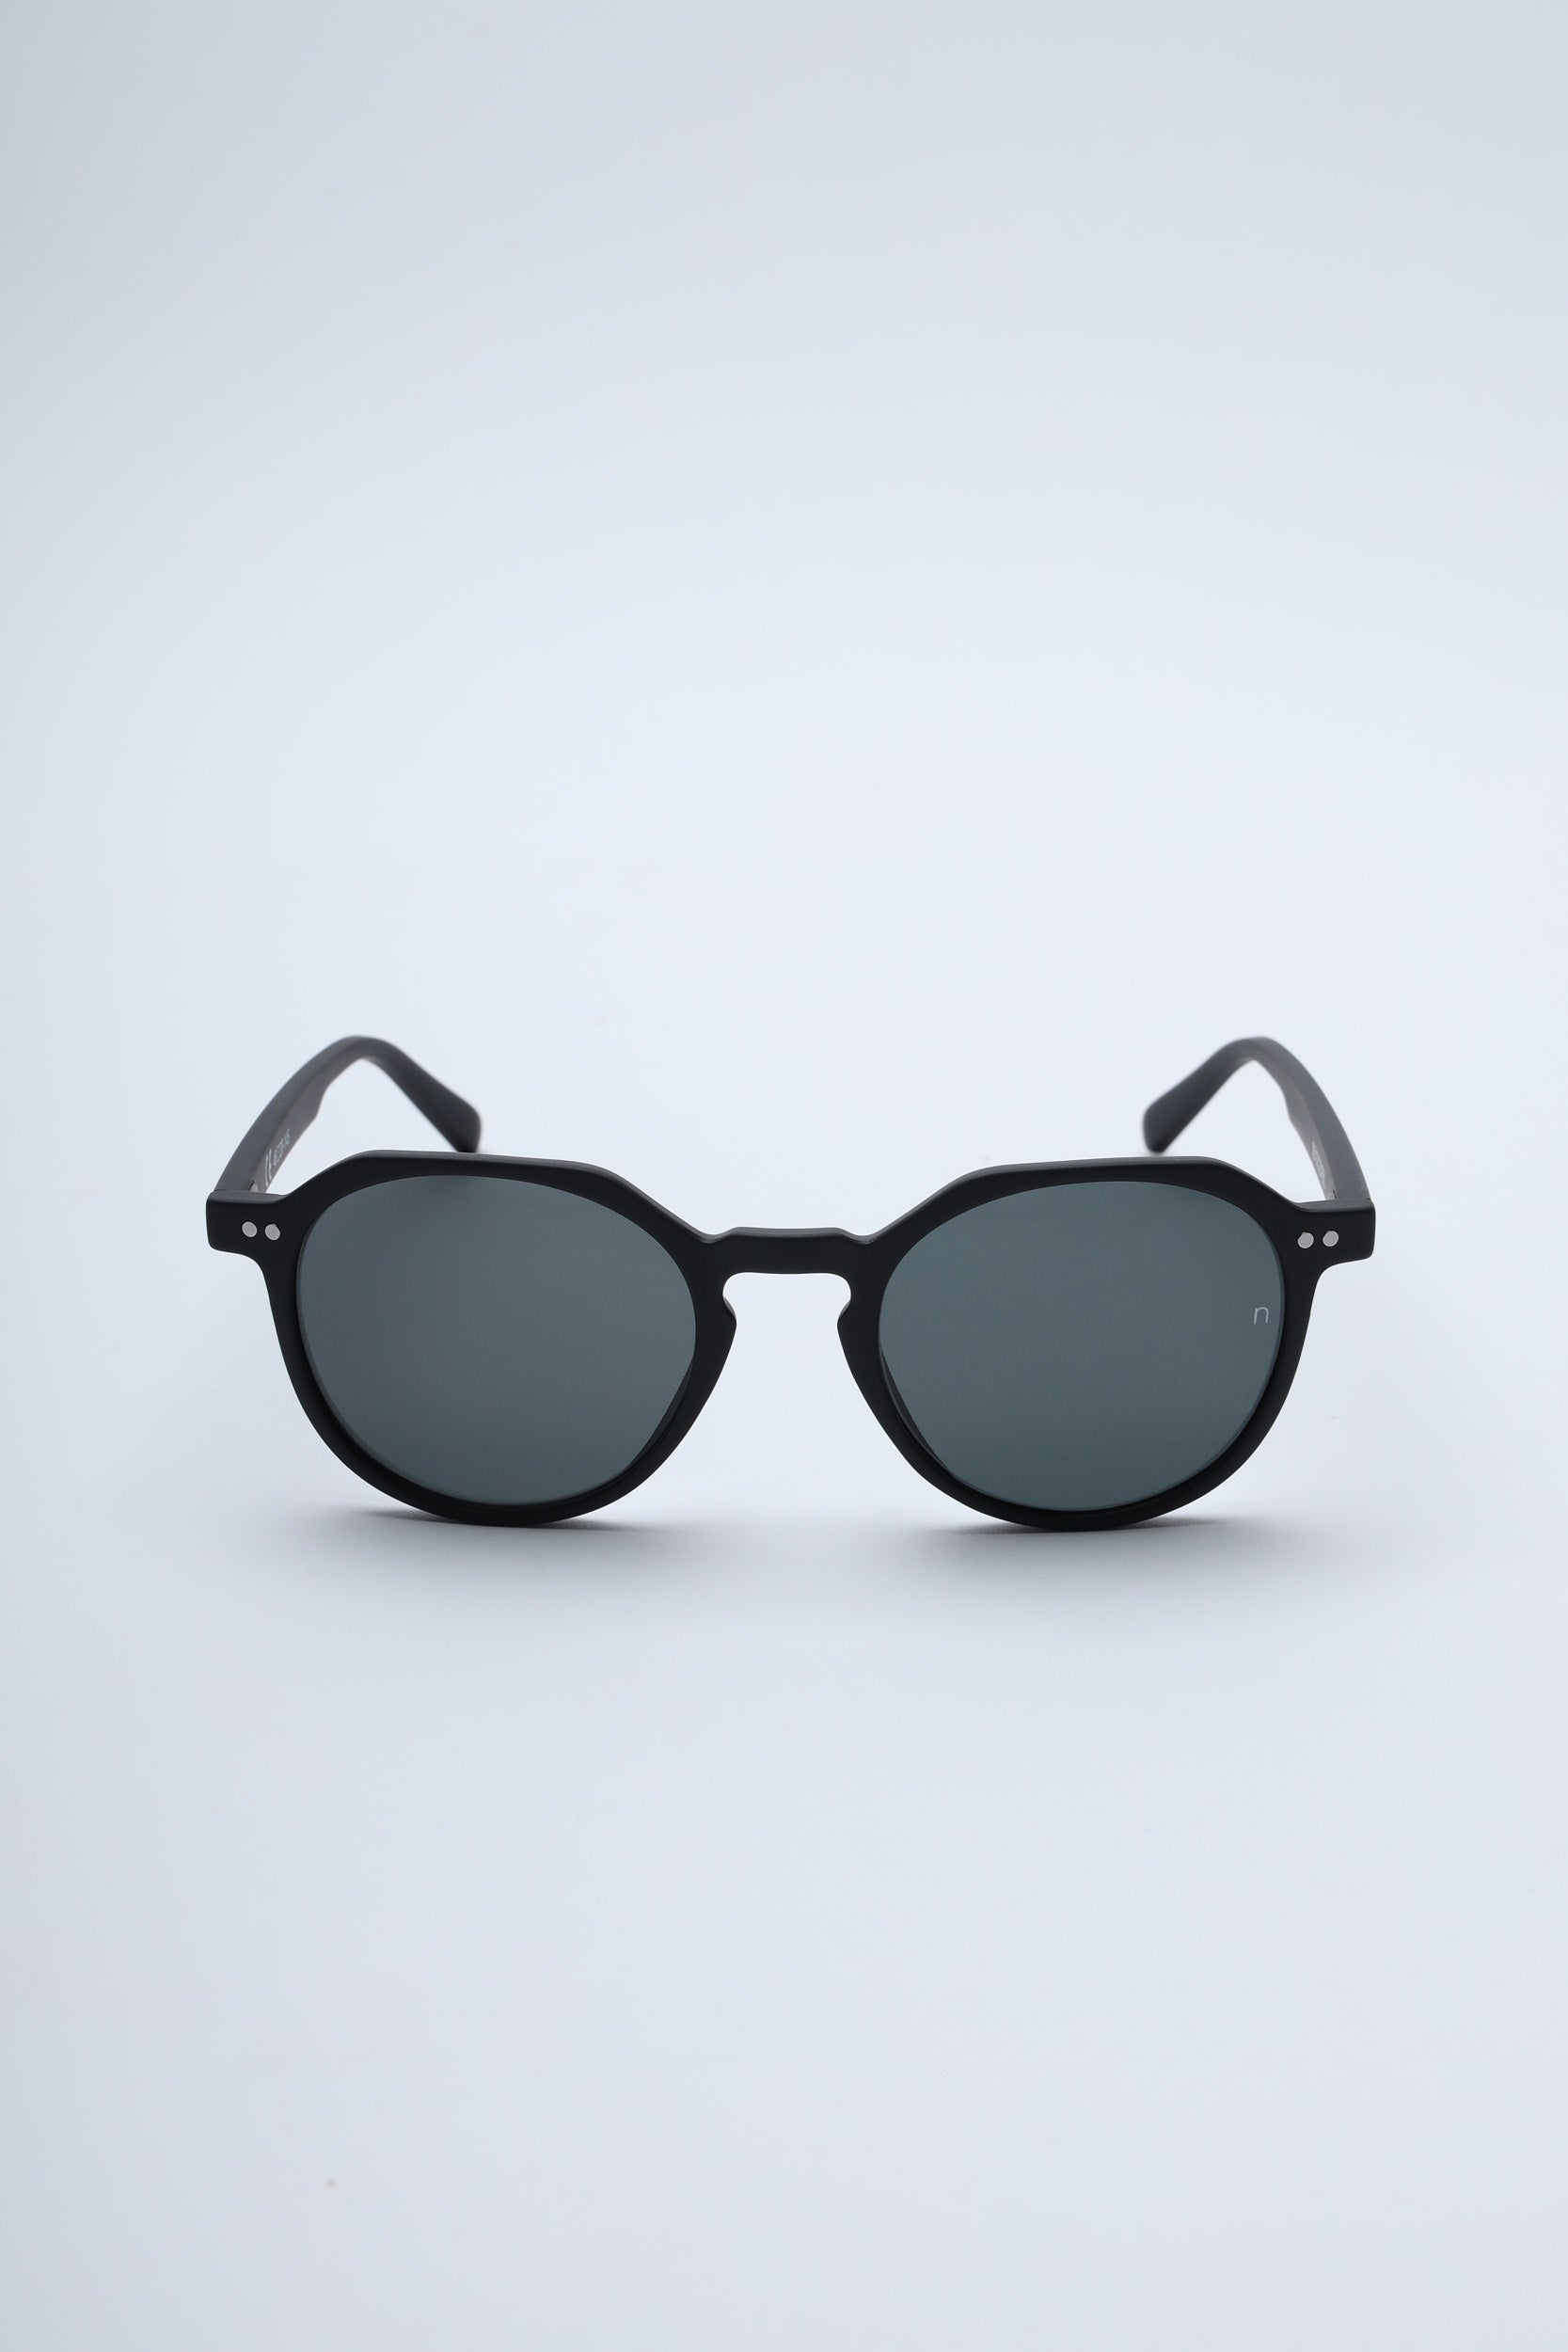 NS1002BFBL PC Black Frame with Black Glass Lens Sunglasses